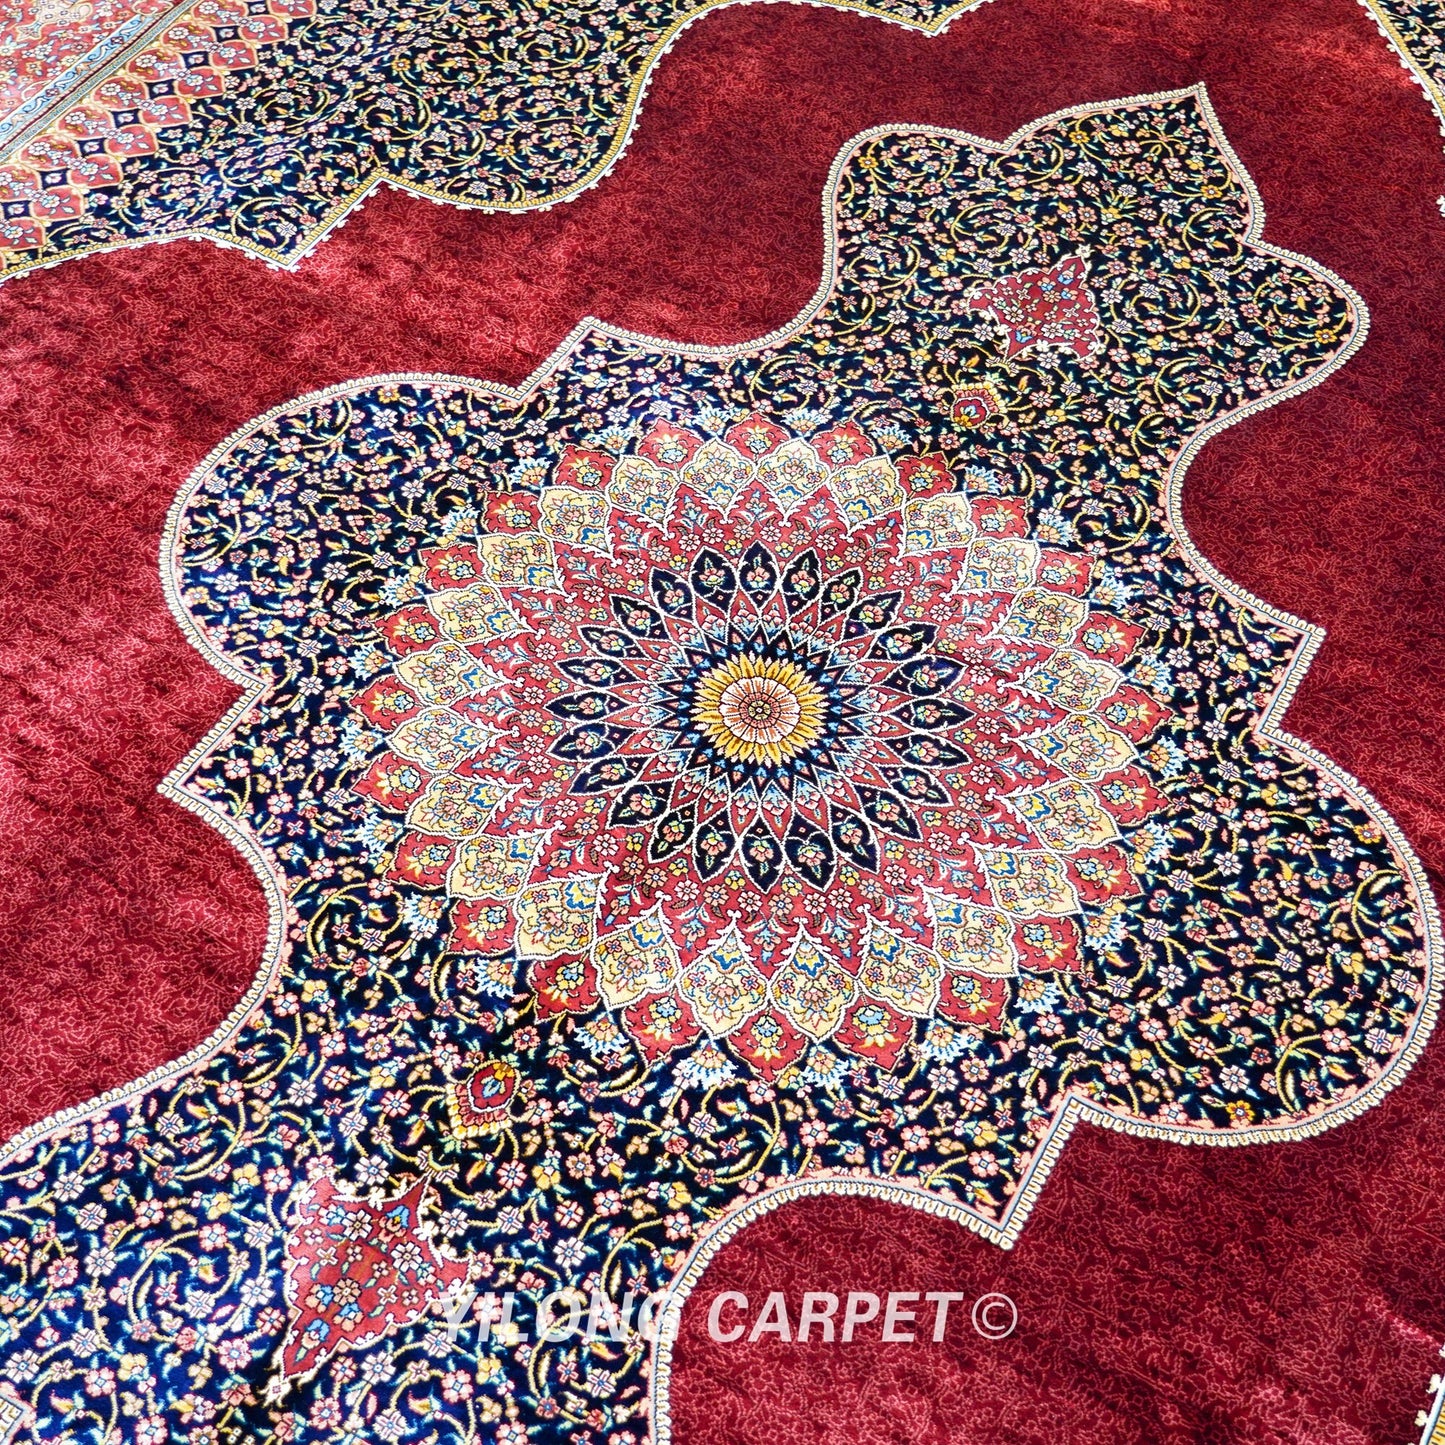 Large Size Red Hereke Silk Rug Persian Silk Handmade Carpet